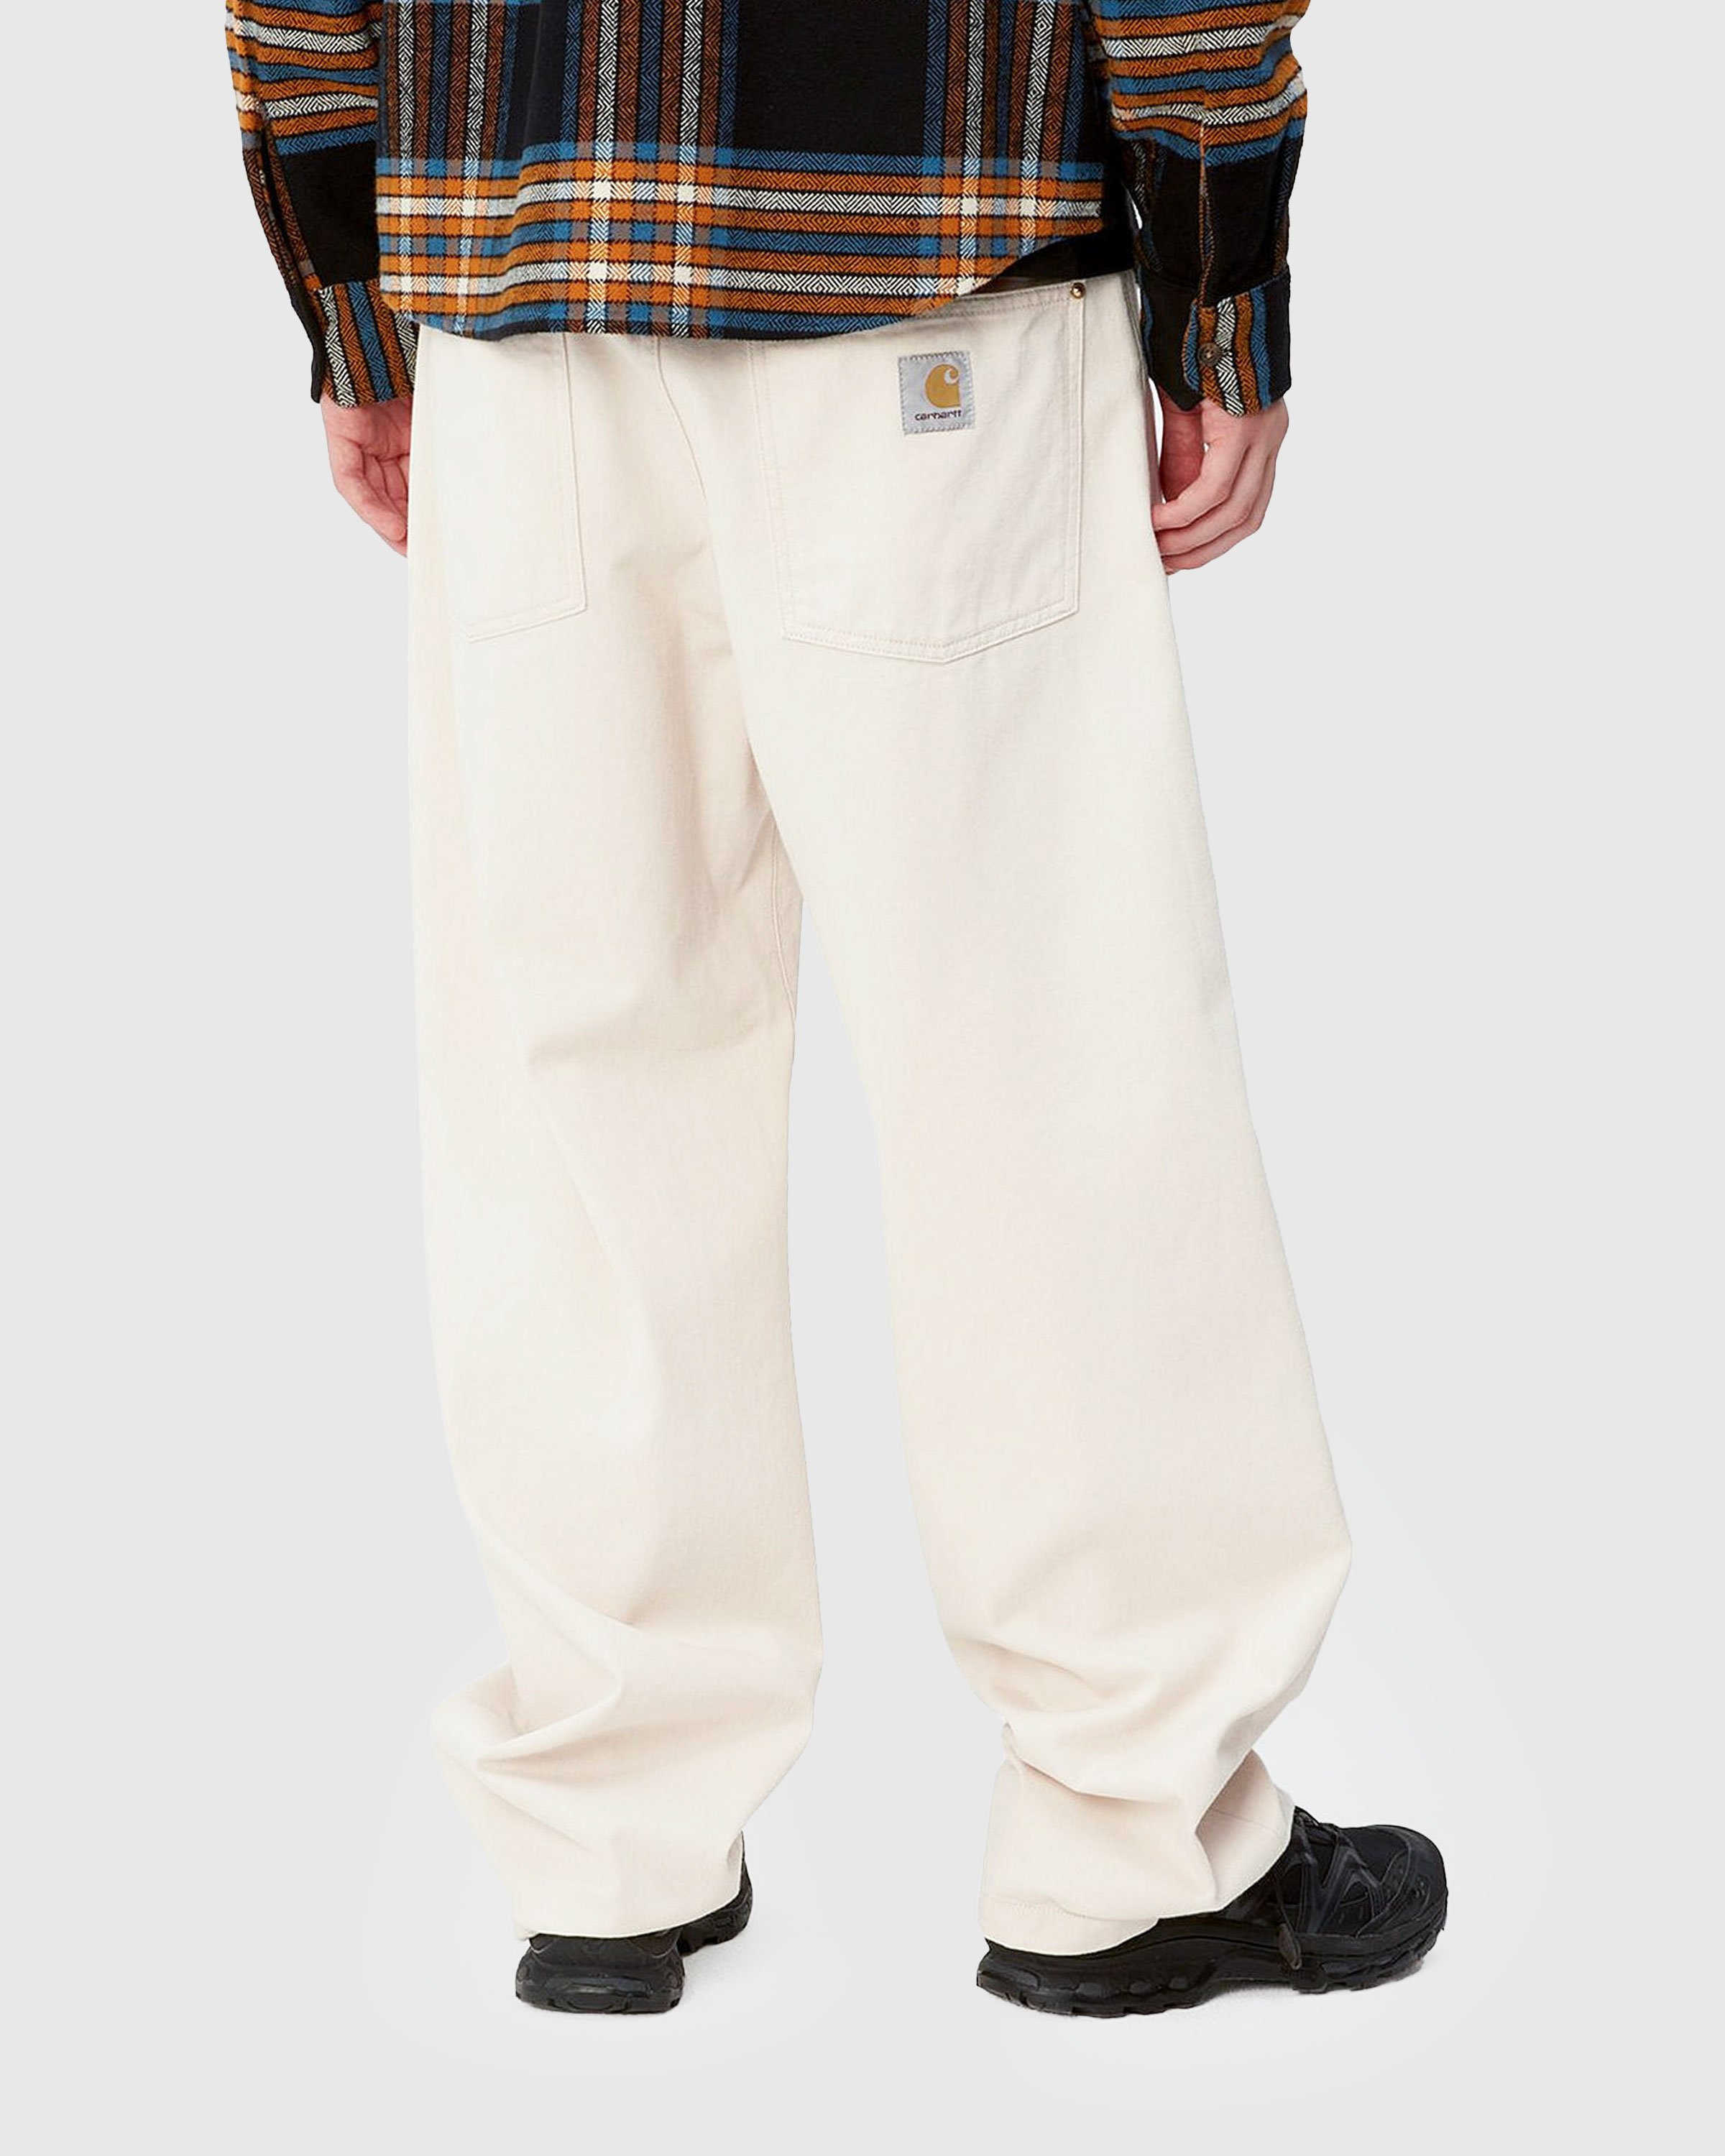 Carhartt WIP - Derby Pant Natural/Rinsed - Clothing - Beige - Image 3